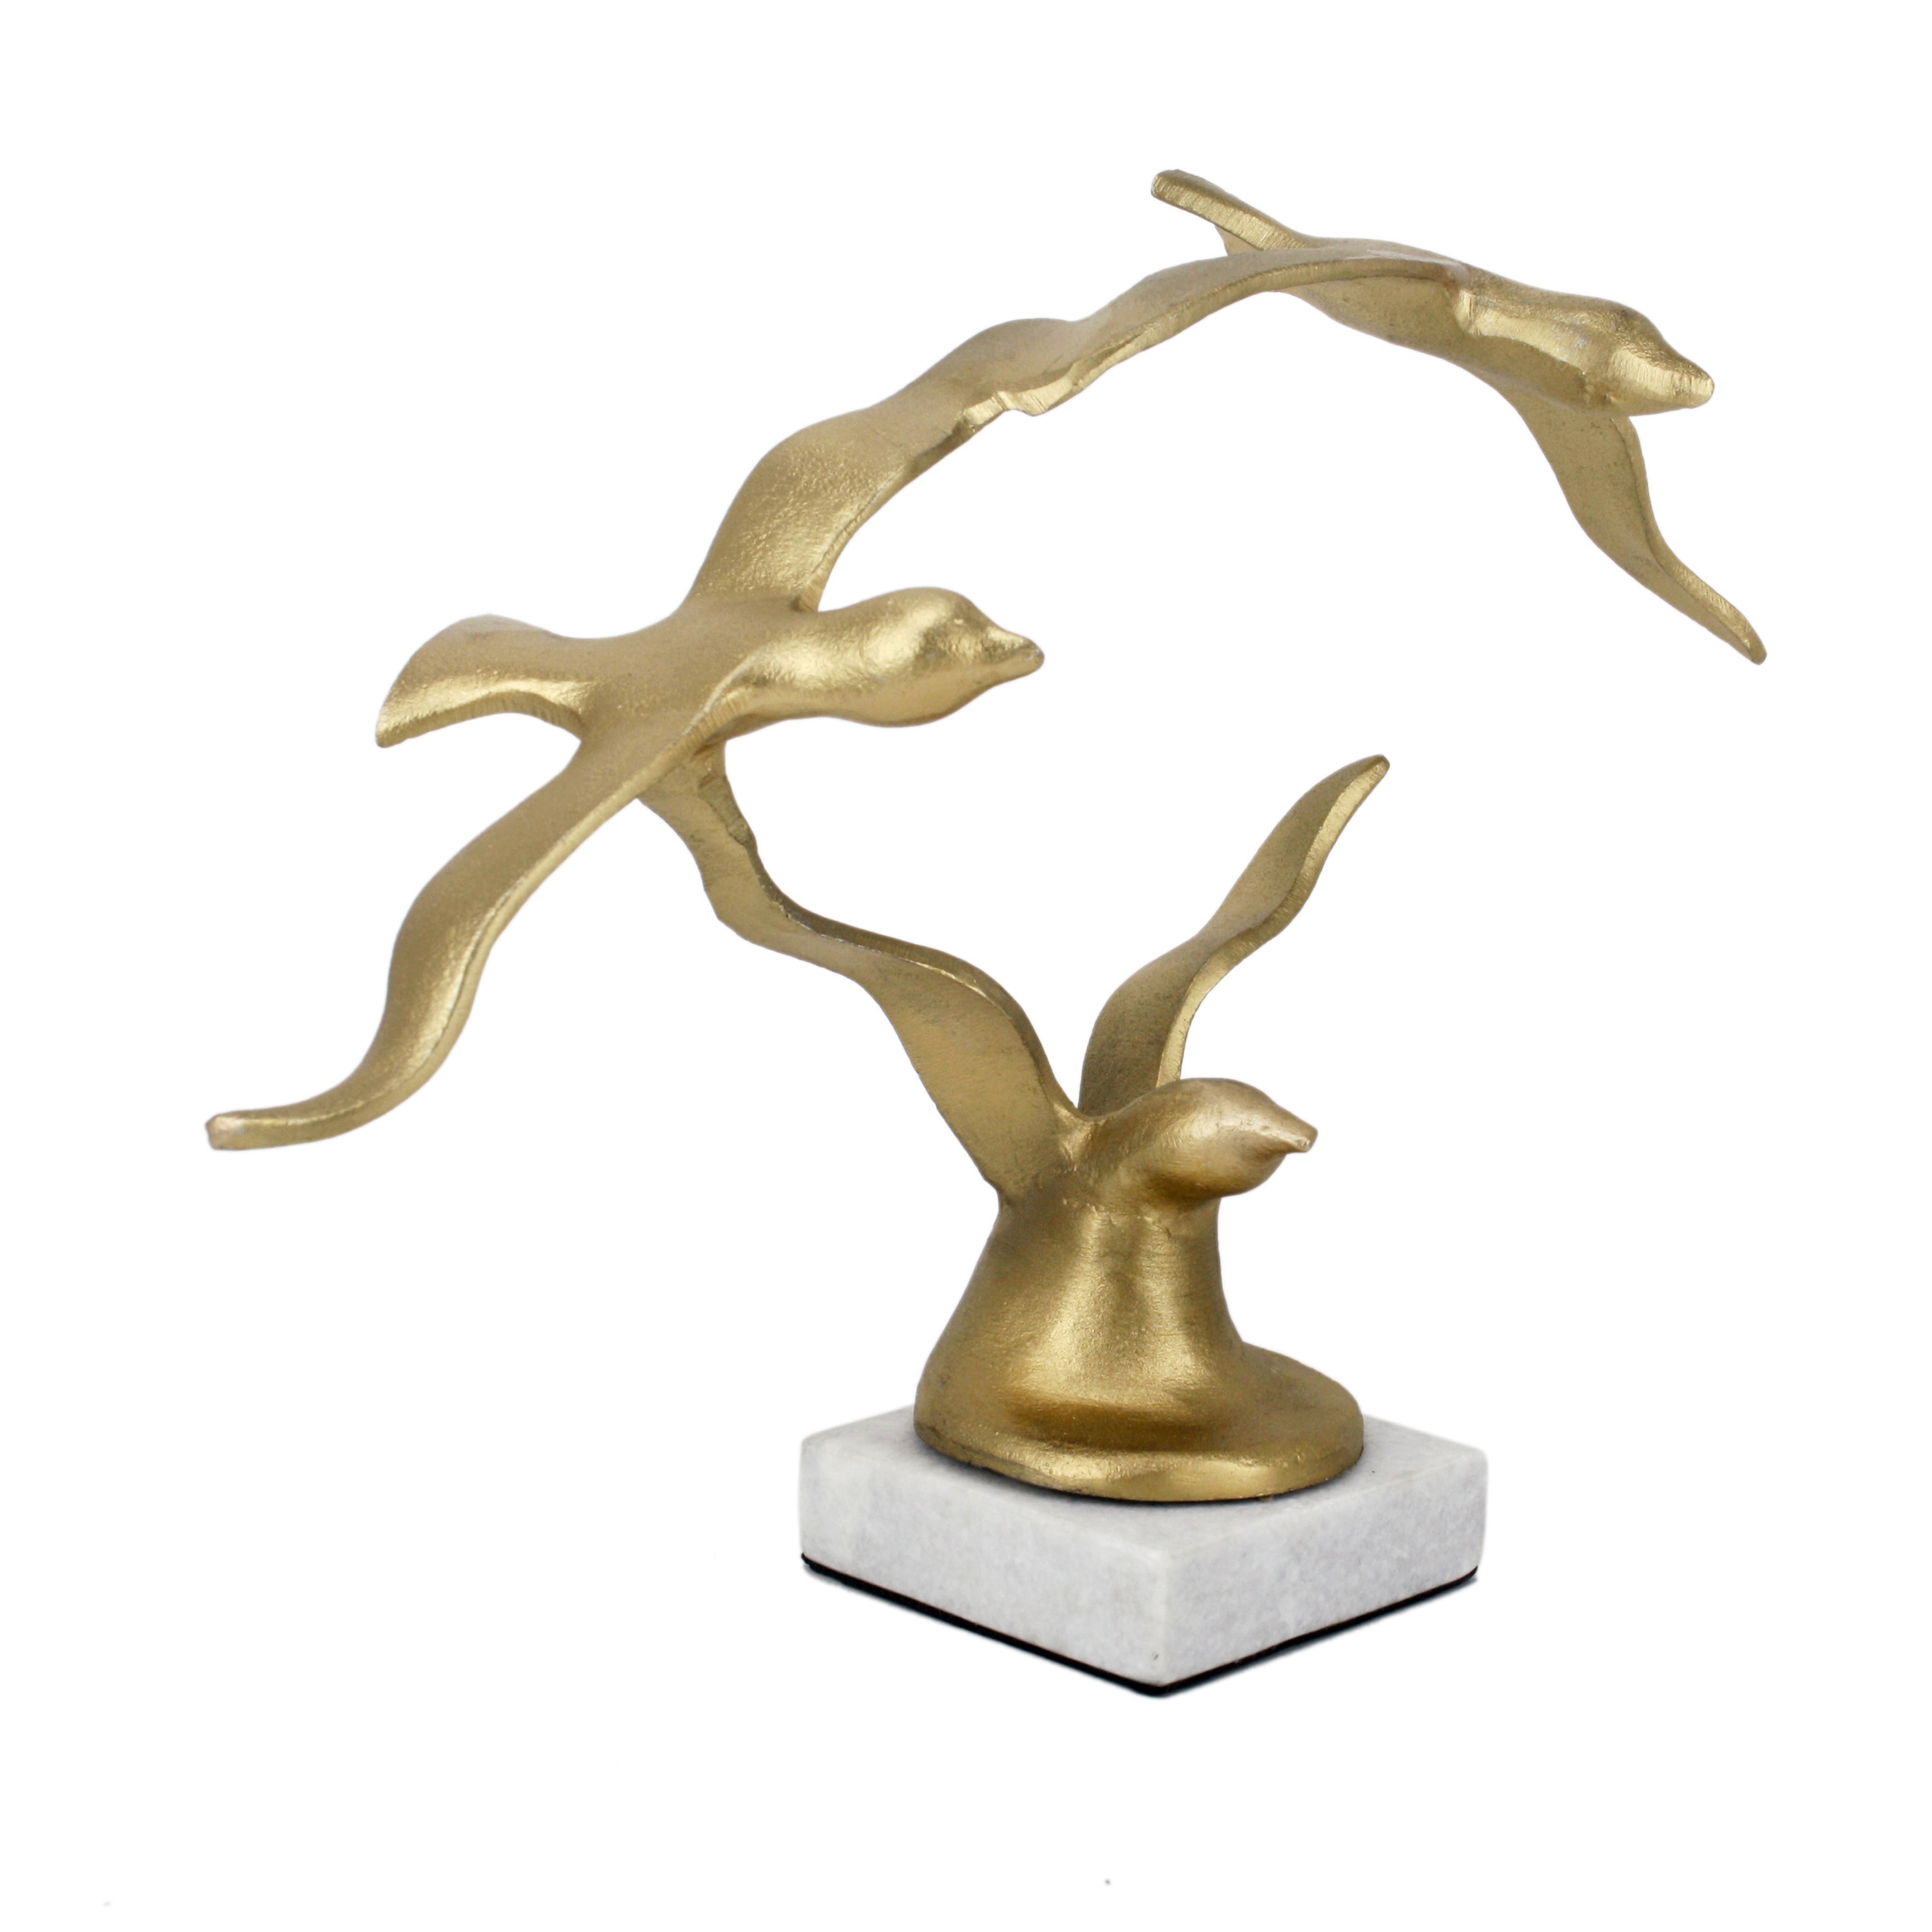 Winged Gold Birds Sculpture